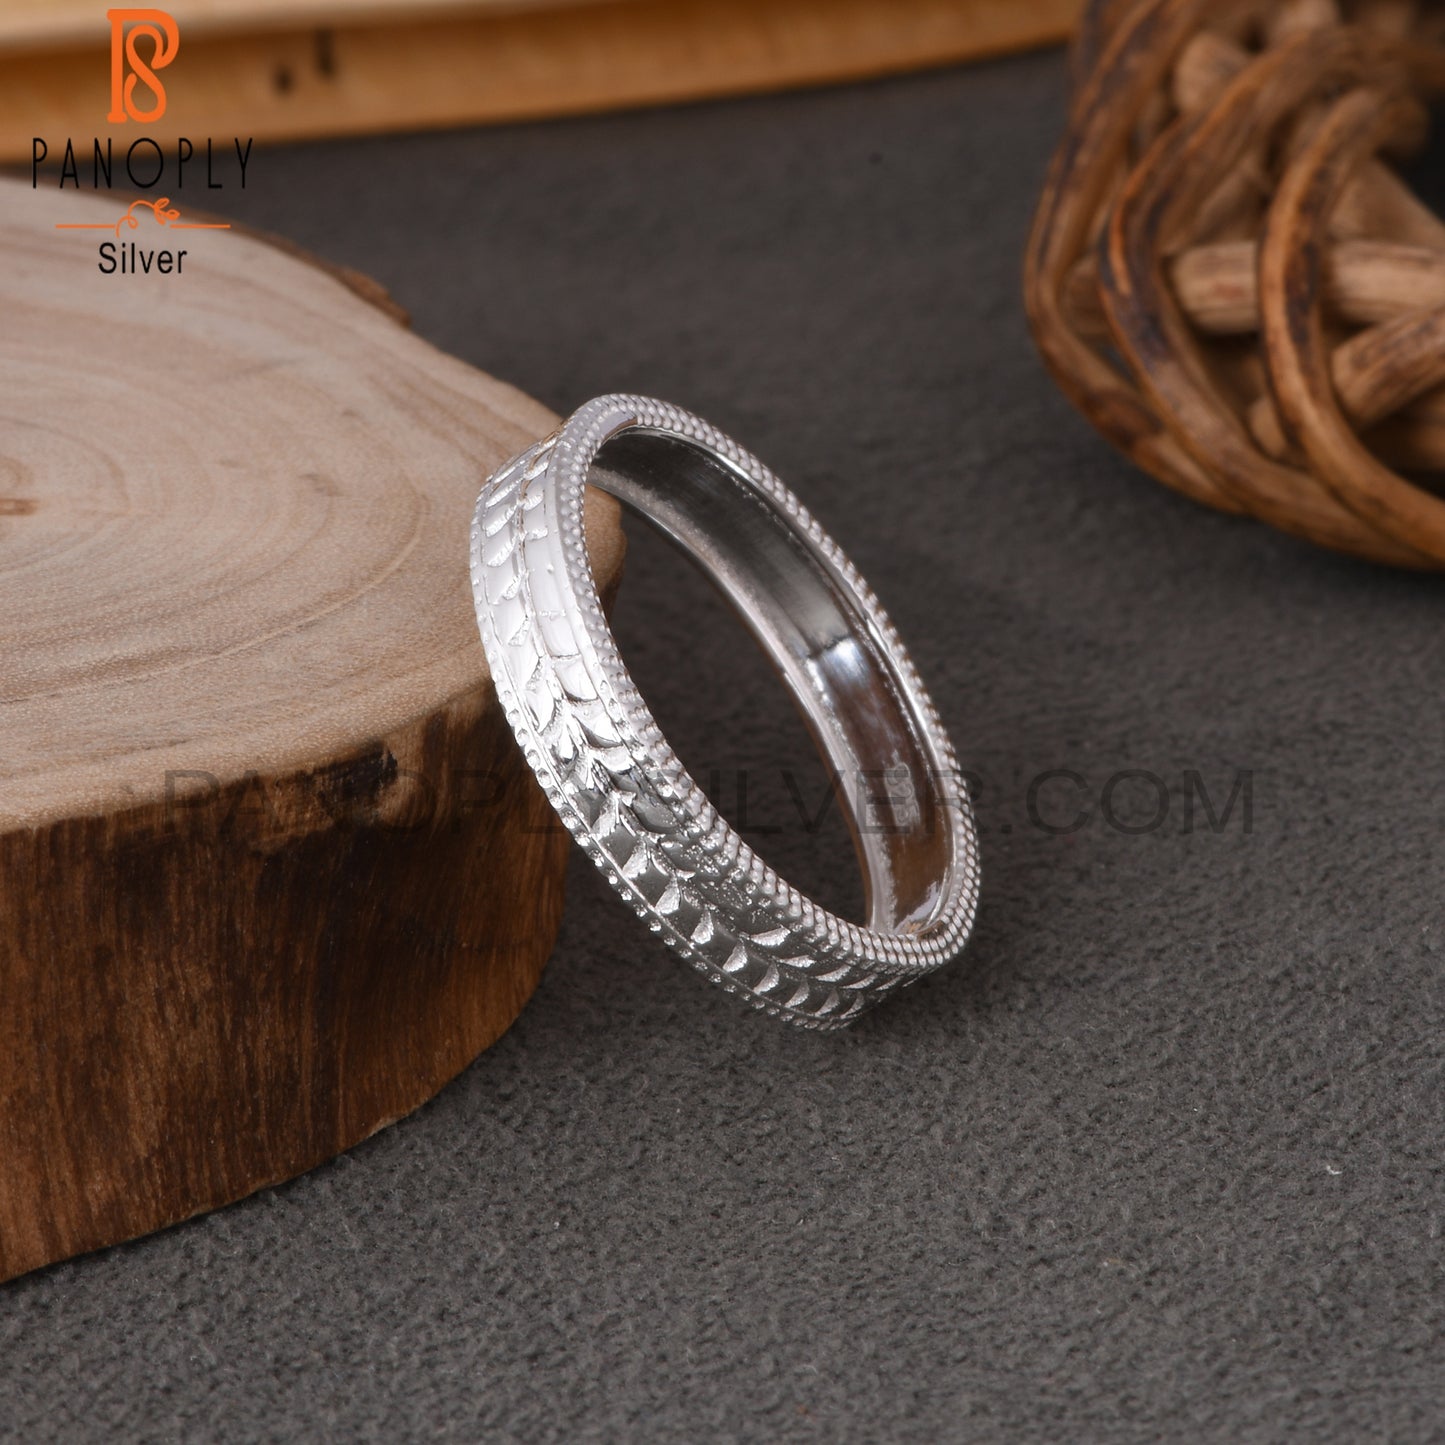 Handmade 925 Sterling Silver Leaf Pattern Ring